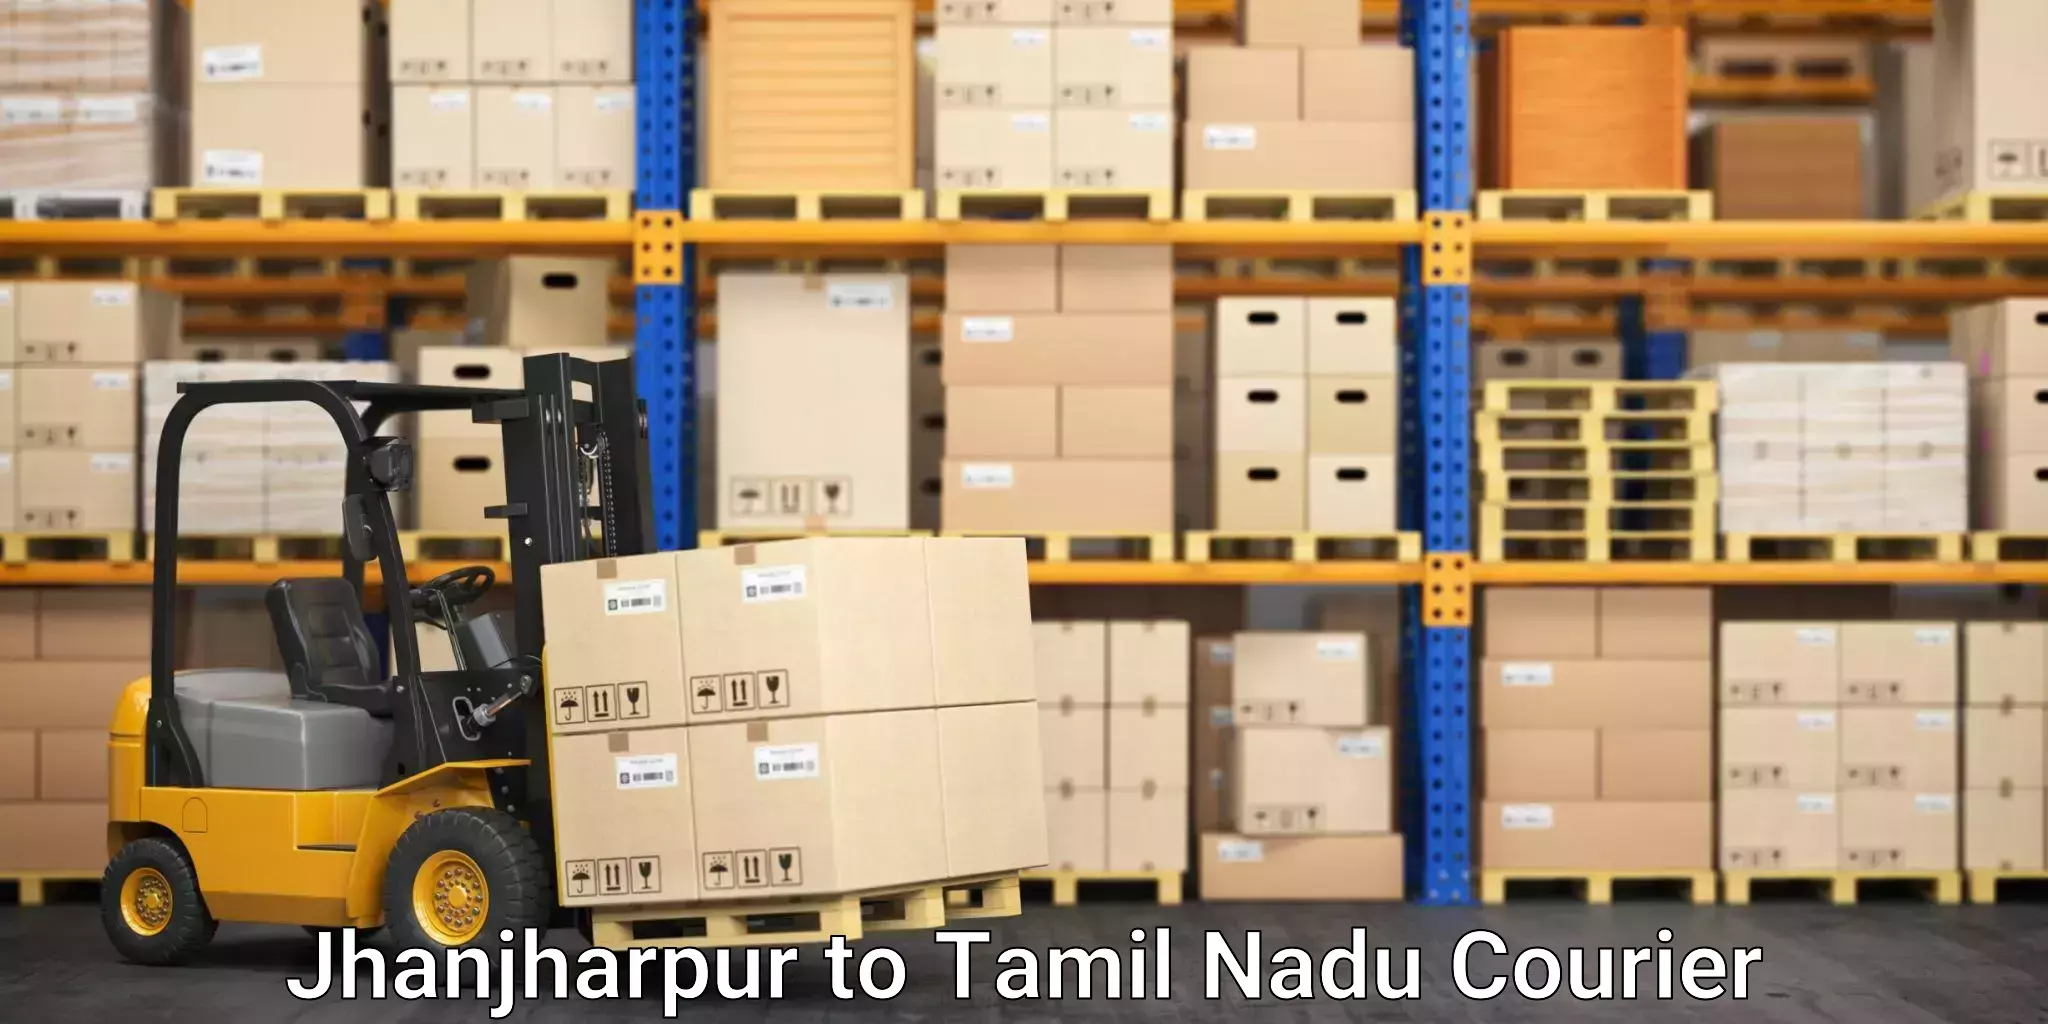 Professional furniture movers Jhanjharpur to Cuddalore